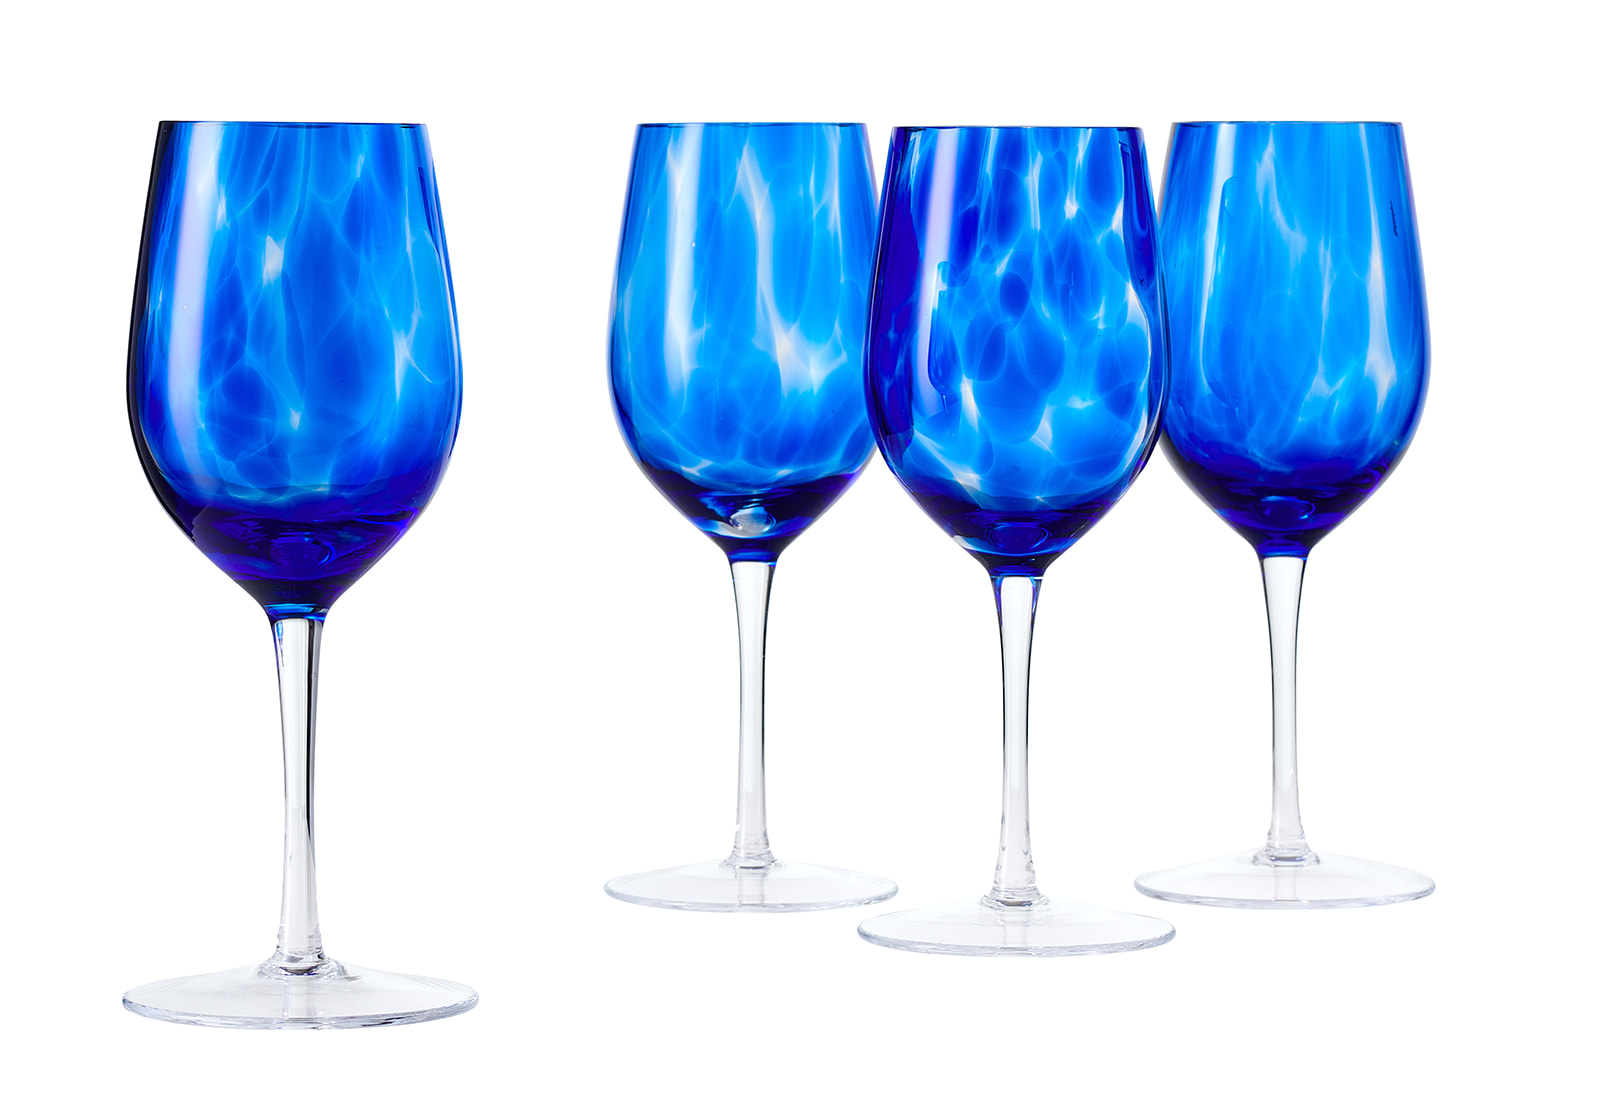 Blue Rose Polish Pottery  Large Decorative Wine Glass